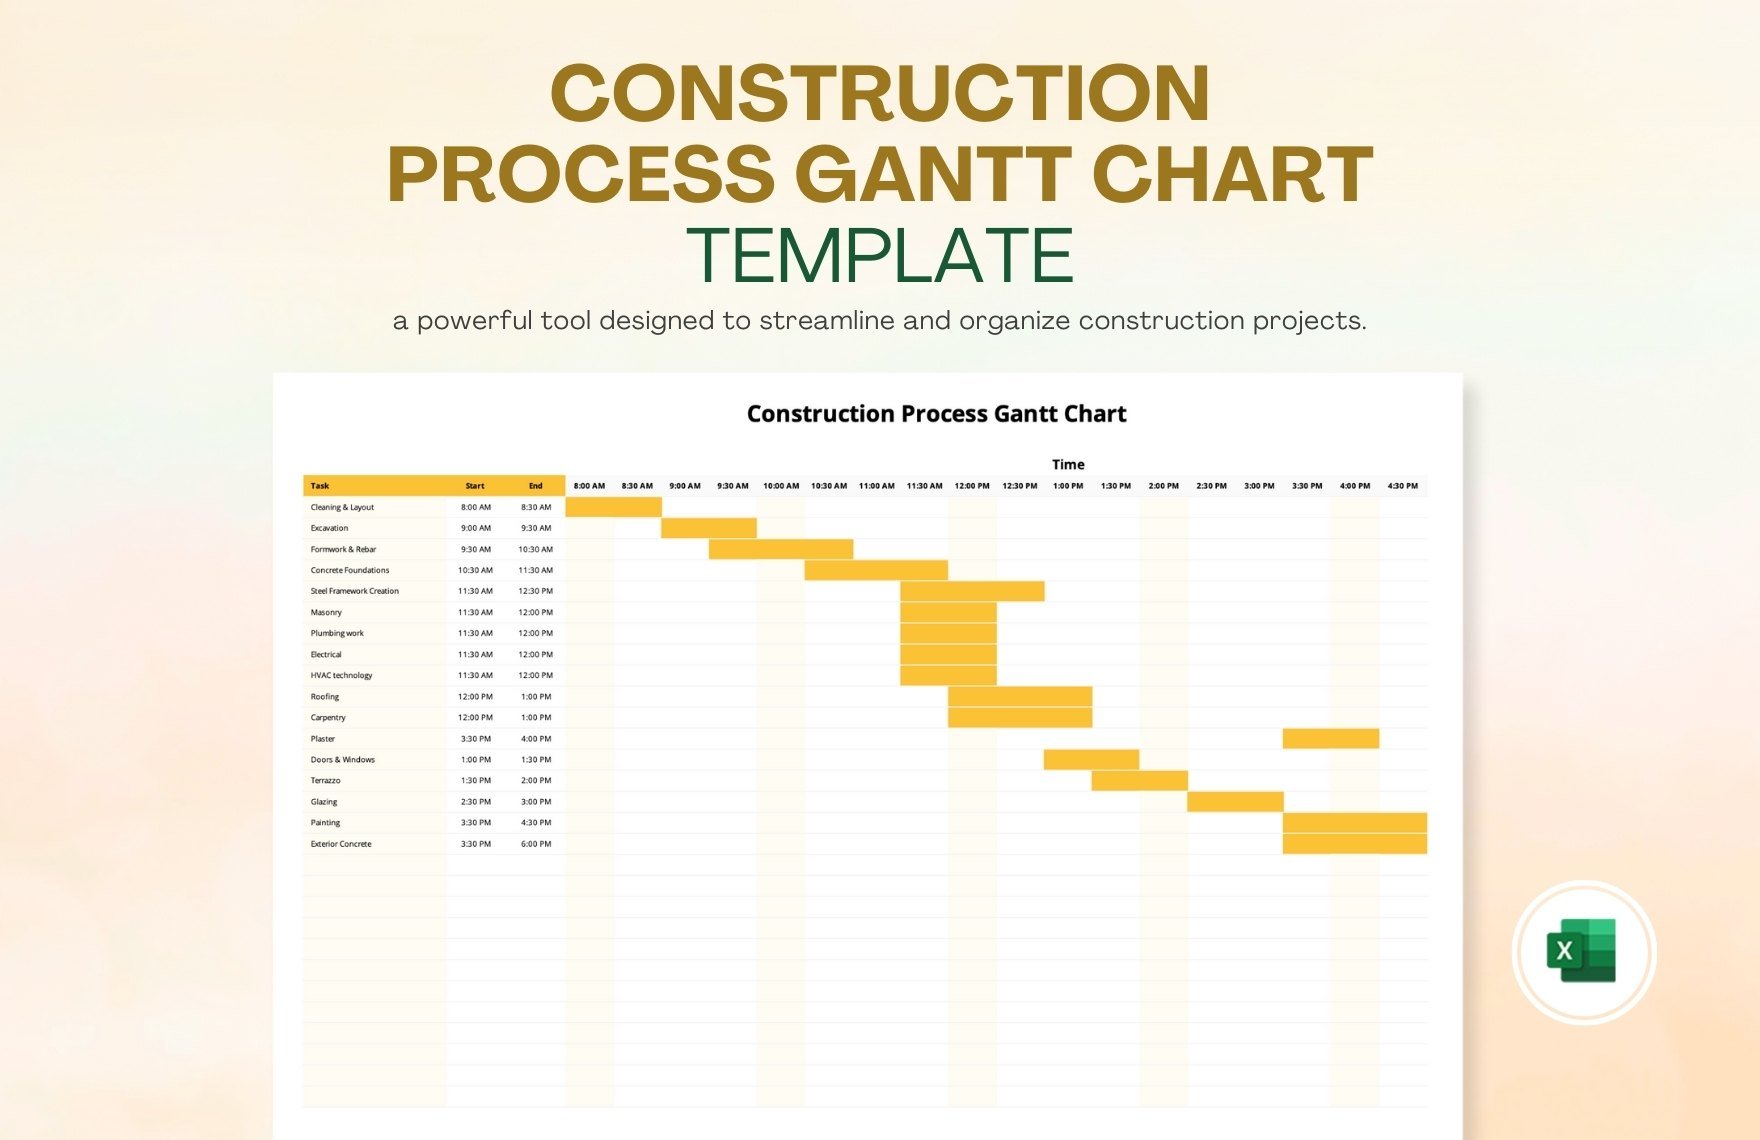 Construction Process Gantt Chart Template in Excel